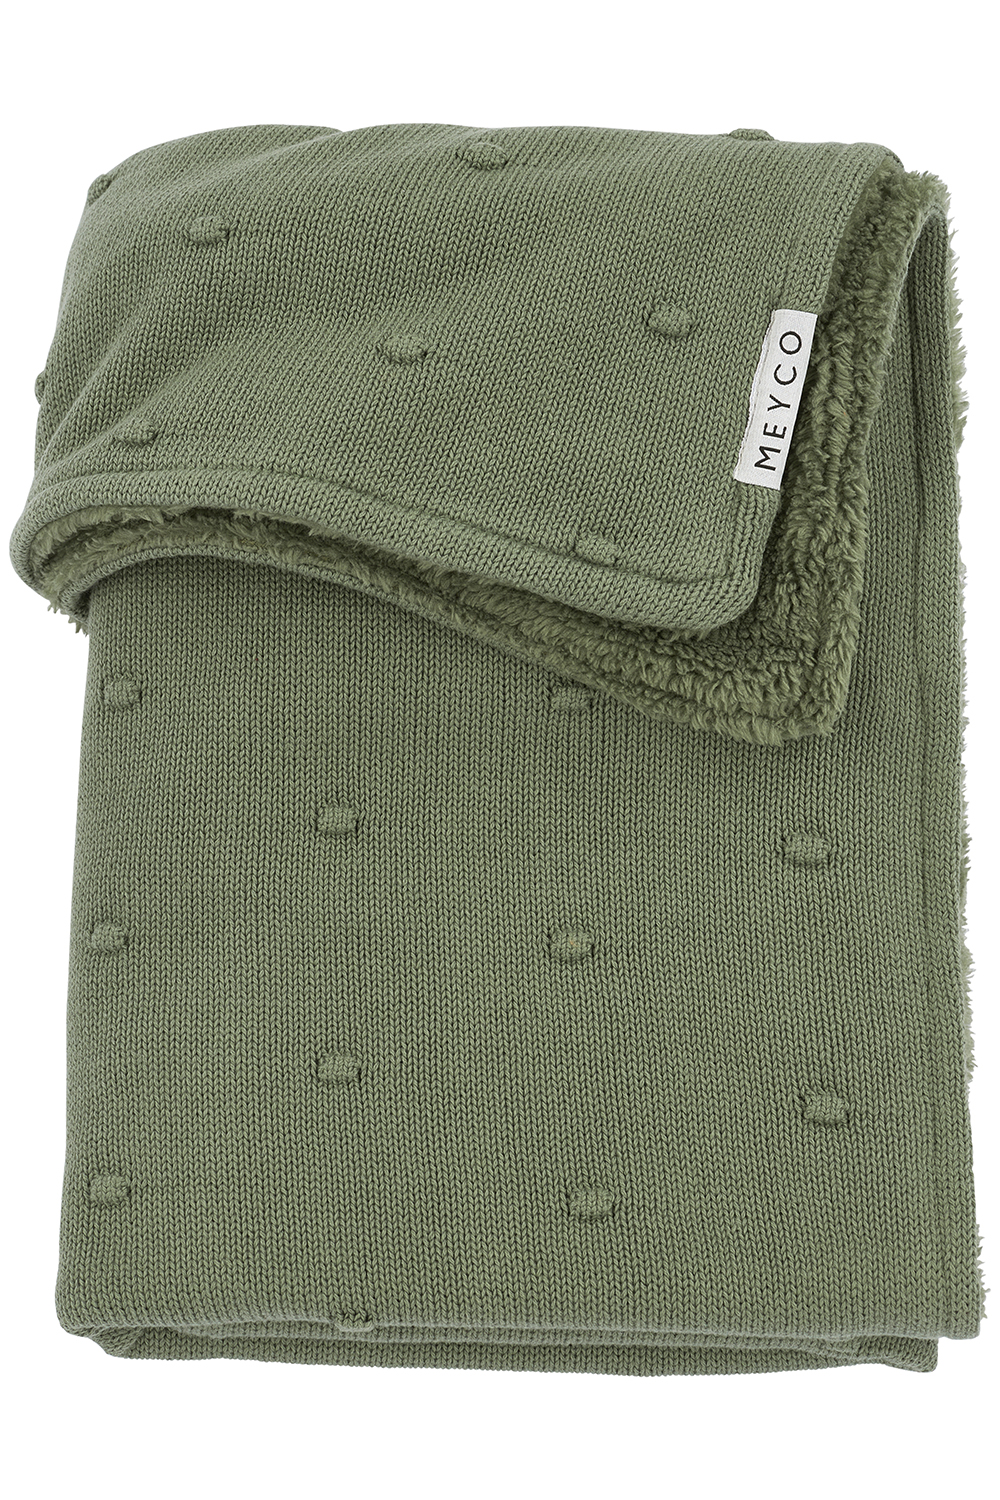 Cot Bed Blanket Mini Knots Fleece - Forest Green - 100x150cm